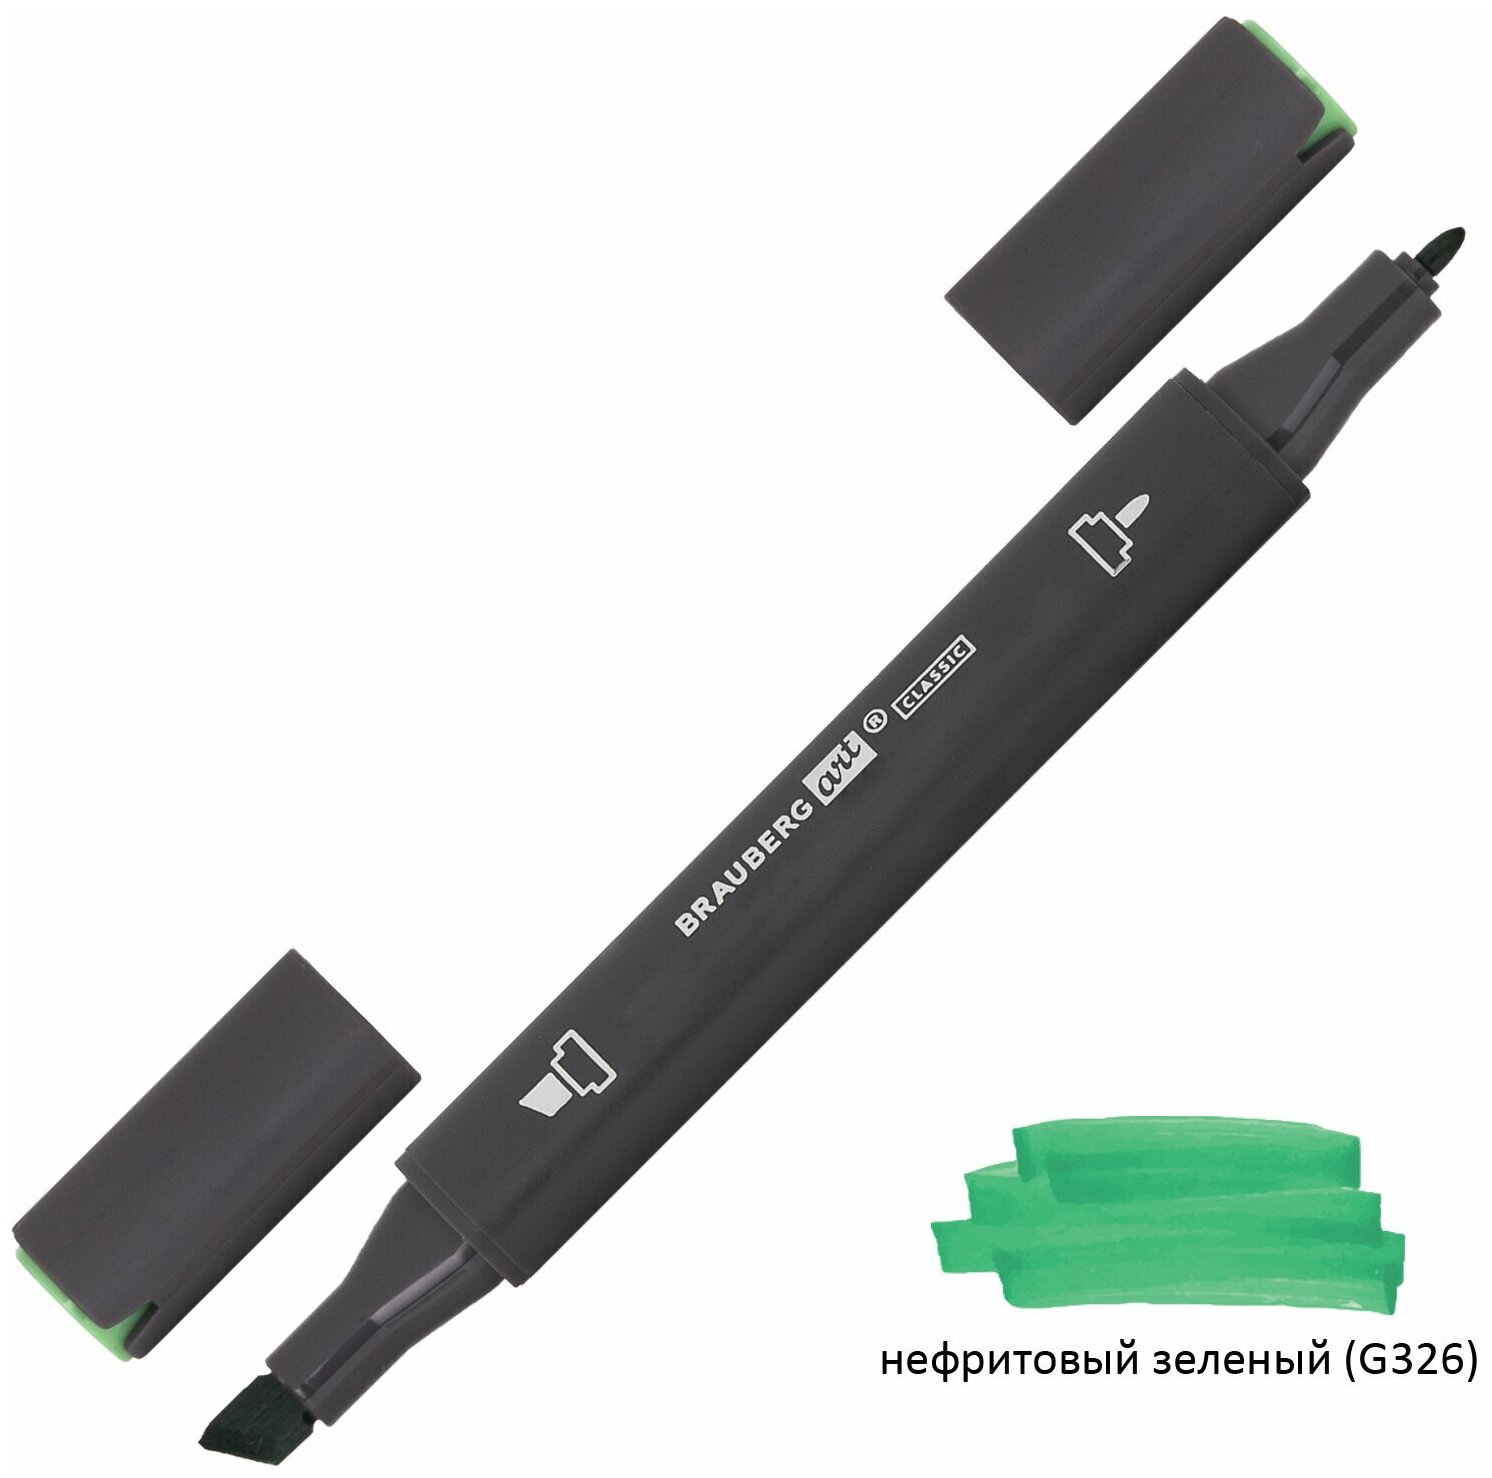 Маркер для скетчинга двусторонний 1мм-6мм BRAUBERG ART CLASSIC, нефритовый зеленый (G326), 151790